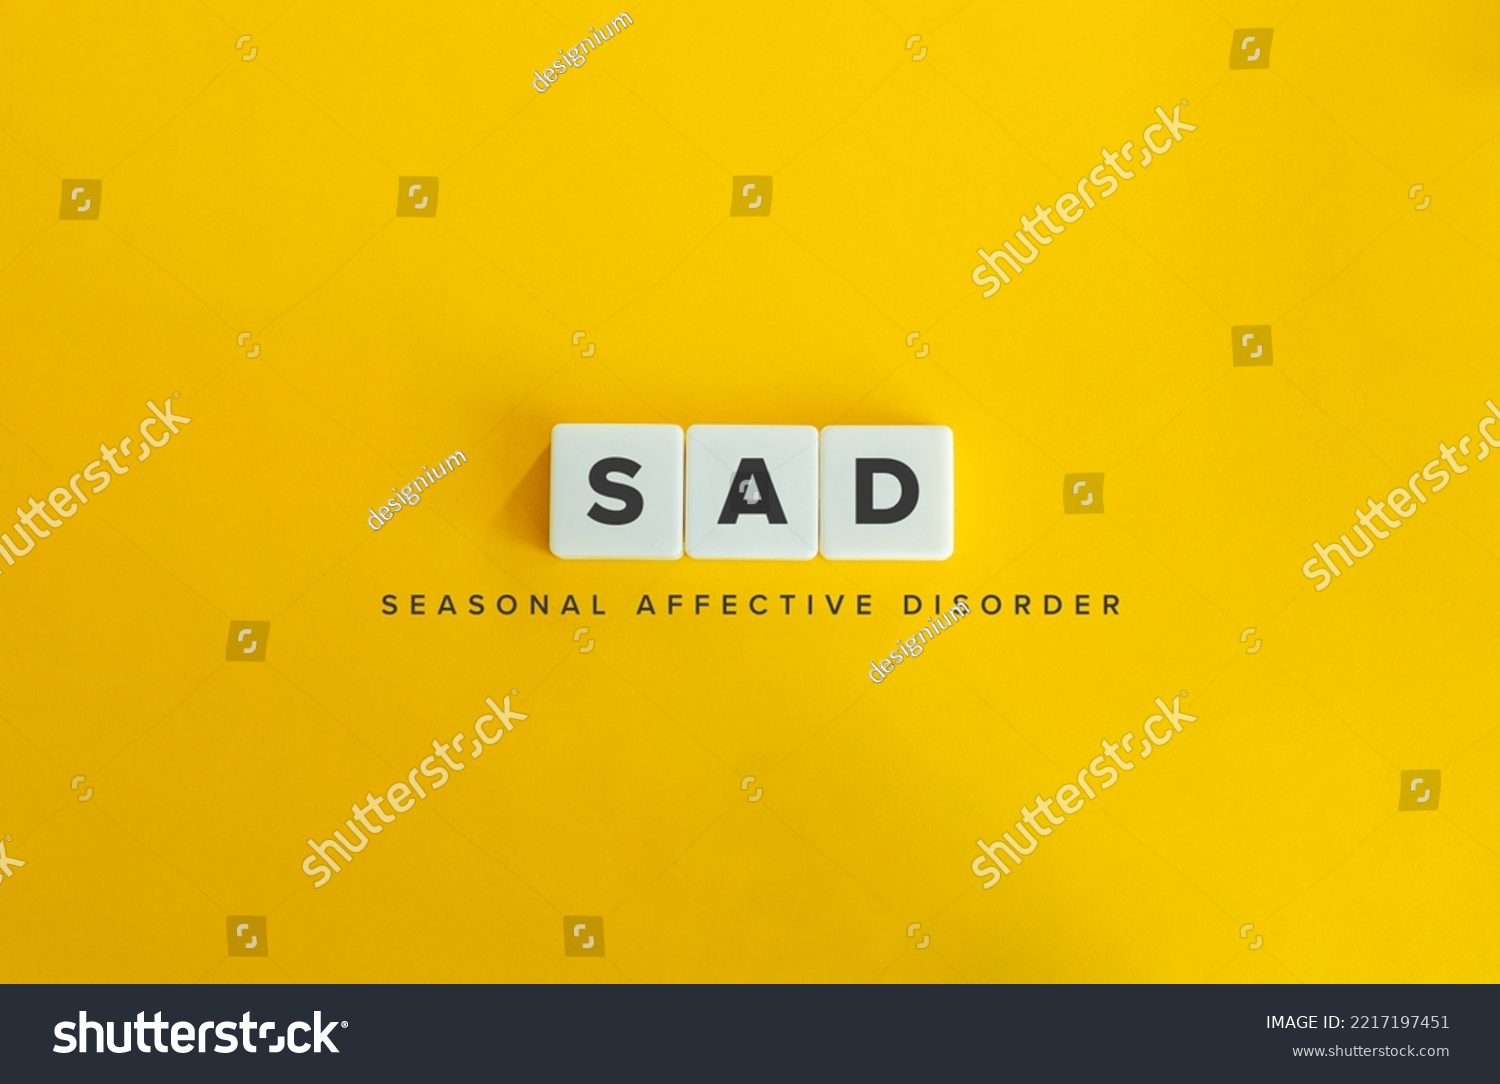 Seasonal affective disorder (SAD) banner. Winter Depression. Block Letter Tiles on Yellow Background. Minimal Aesthetics. #2217197451